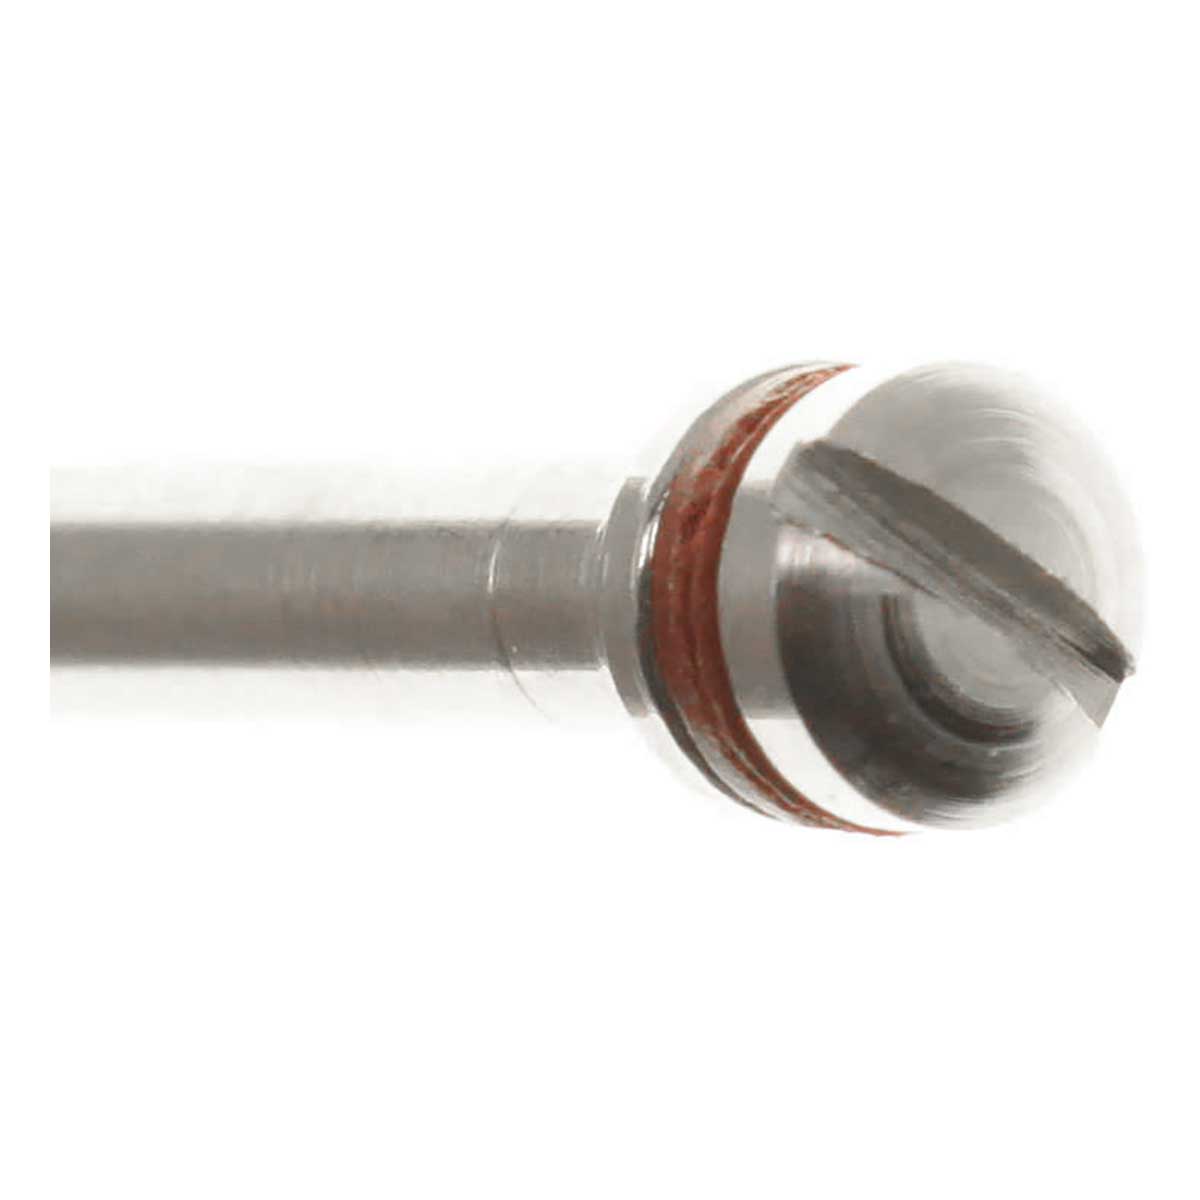 02.4mm - 3/32 inch Small Head Screw Mandrel - 1/8 inch shank